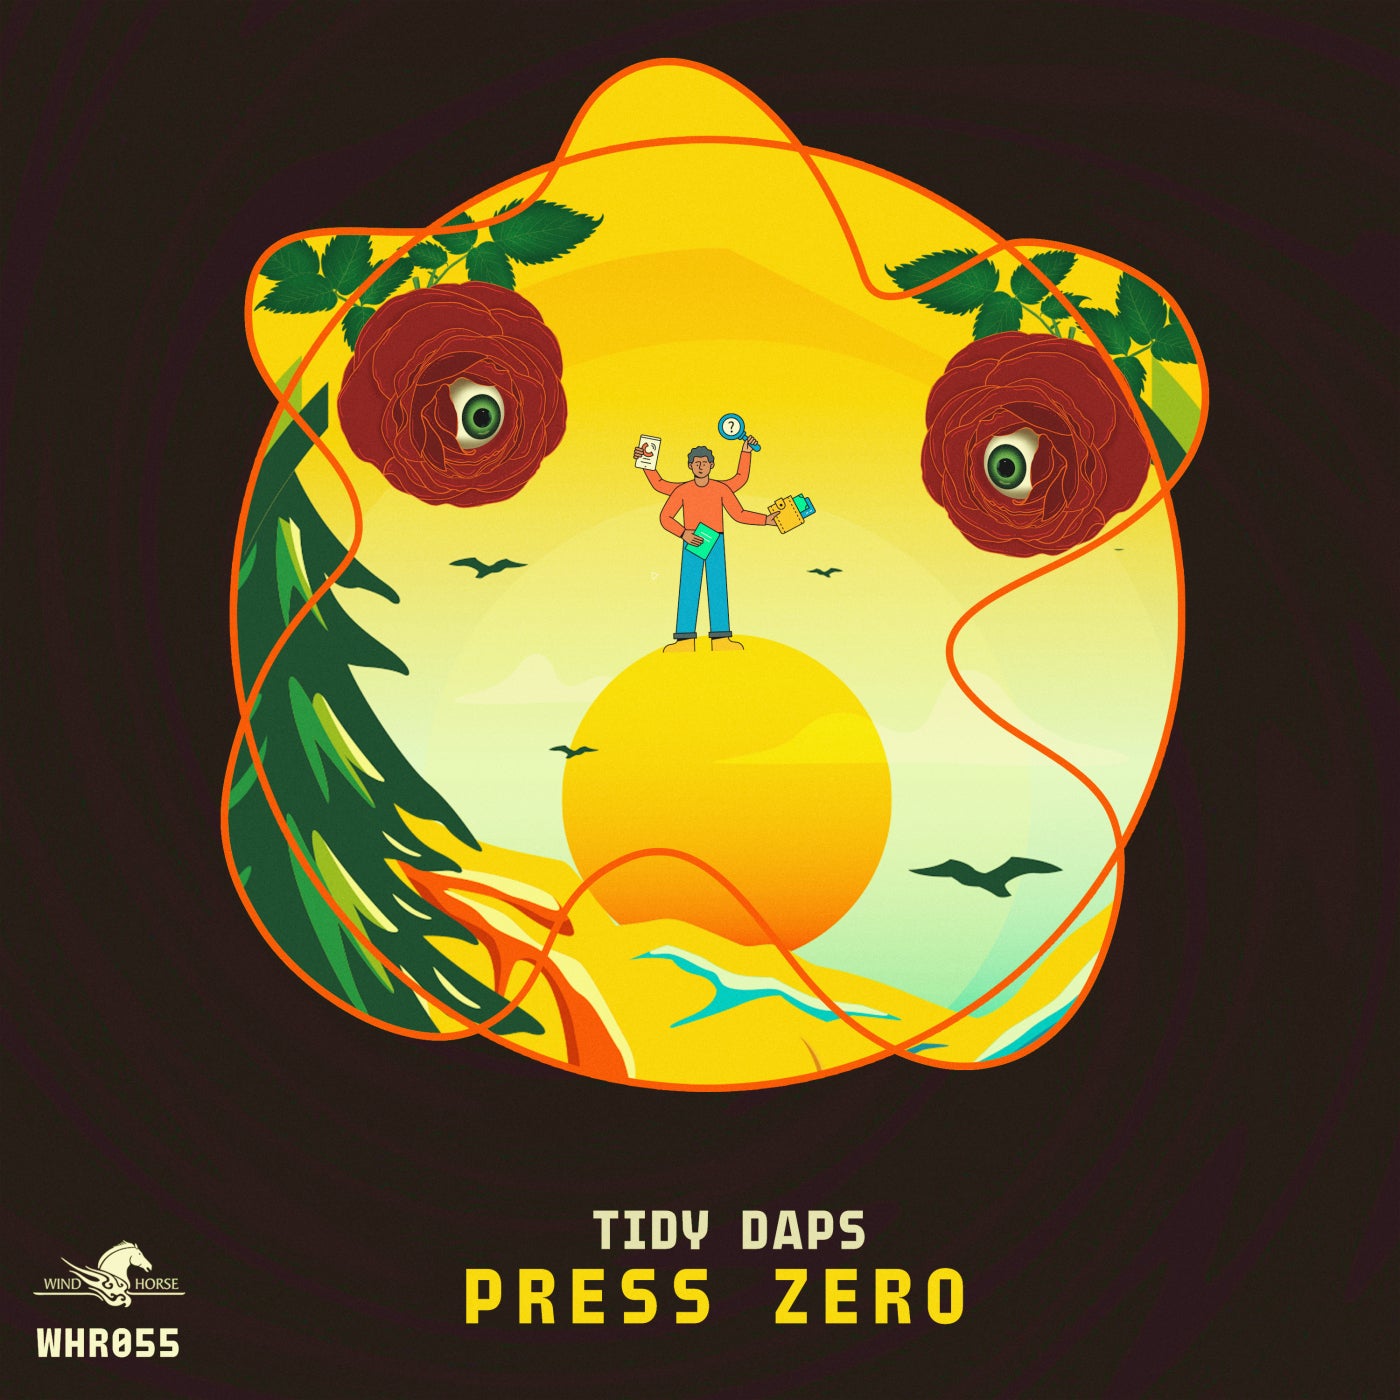 Press Zero